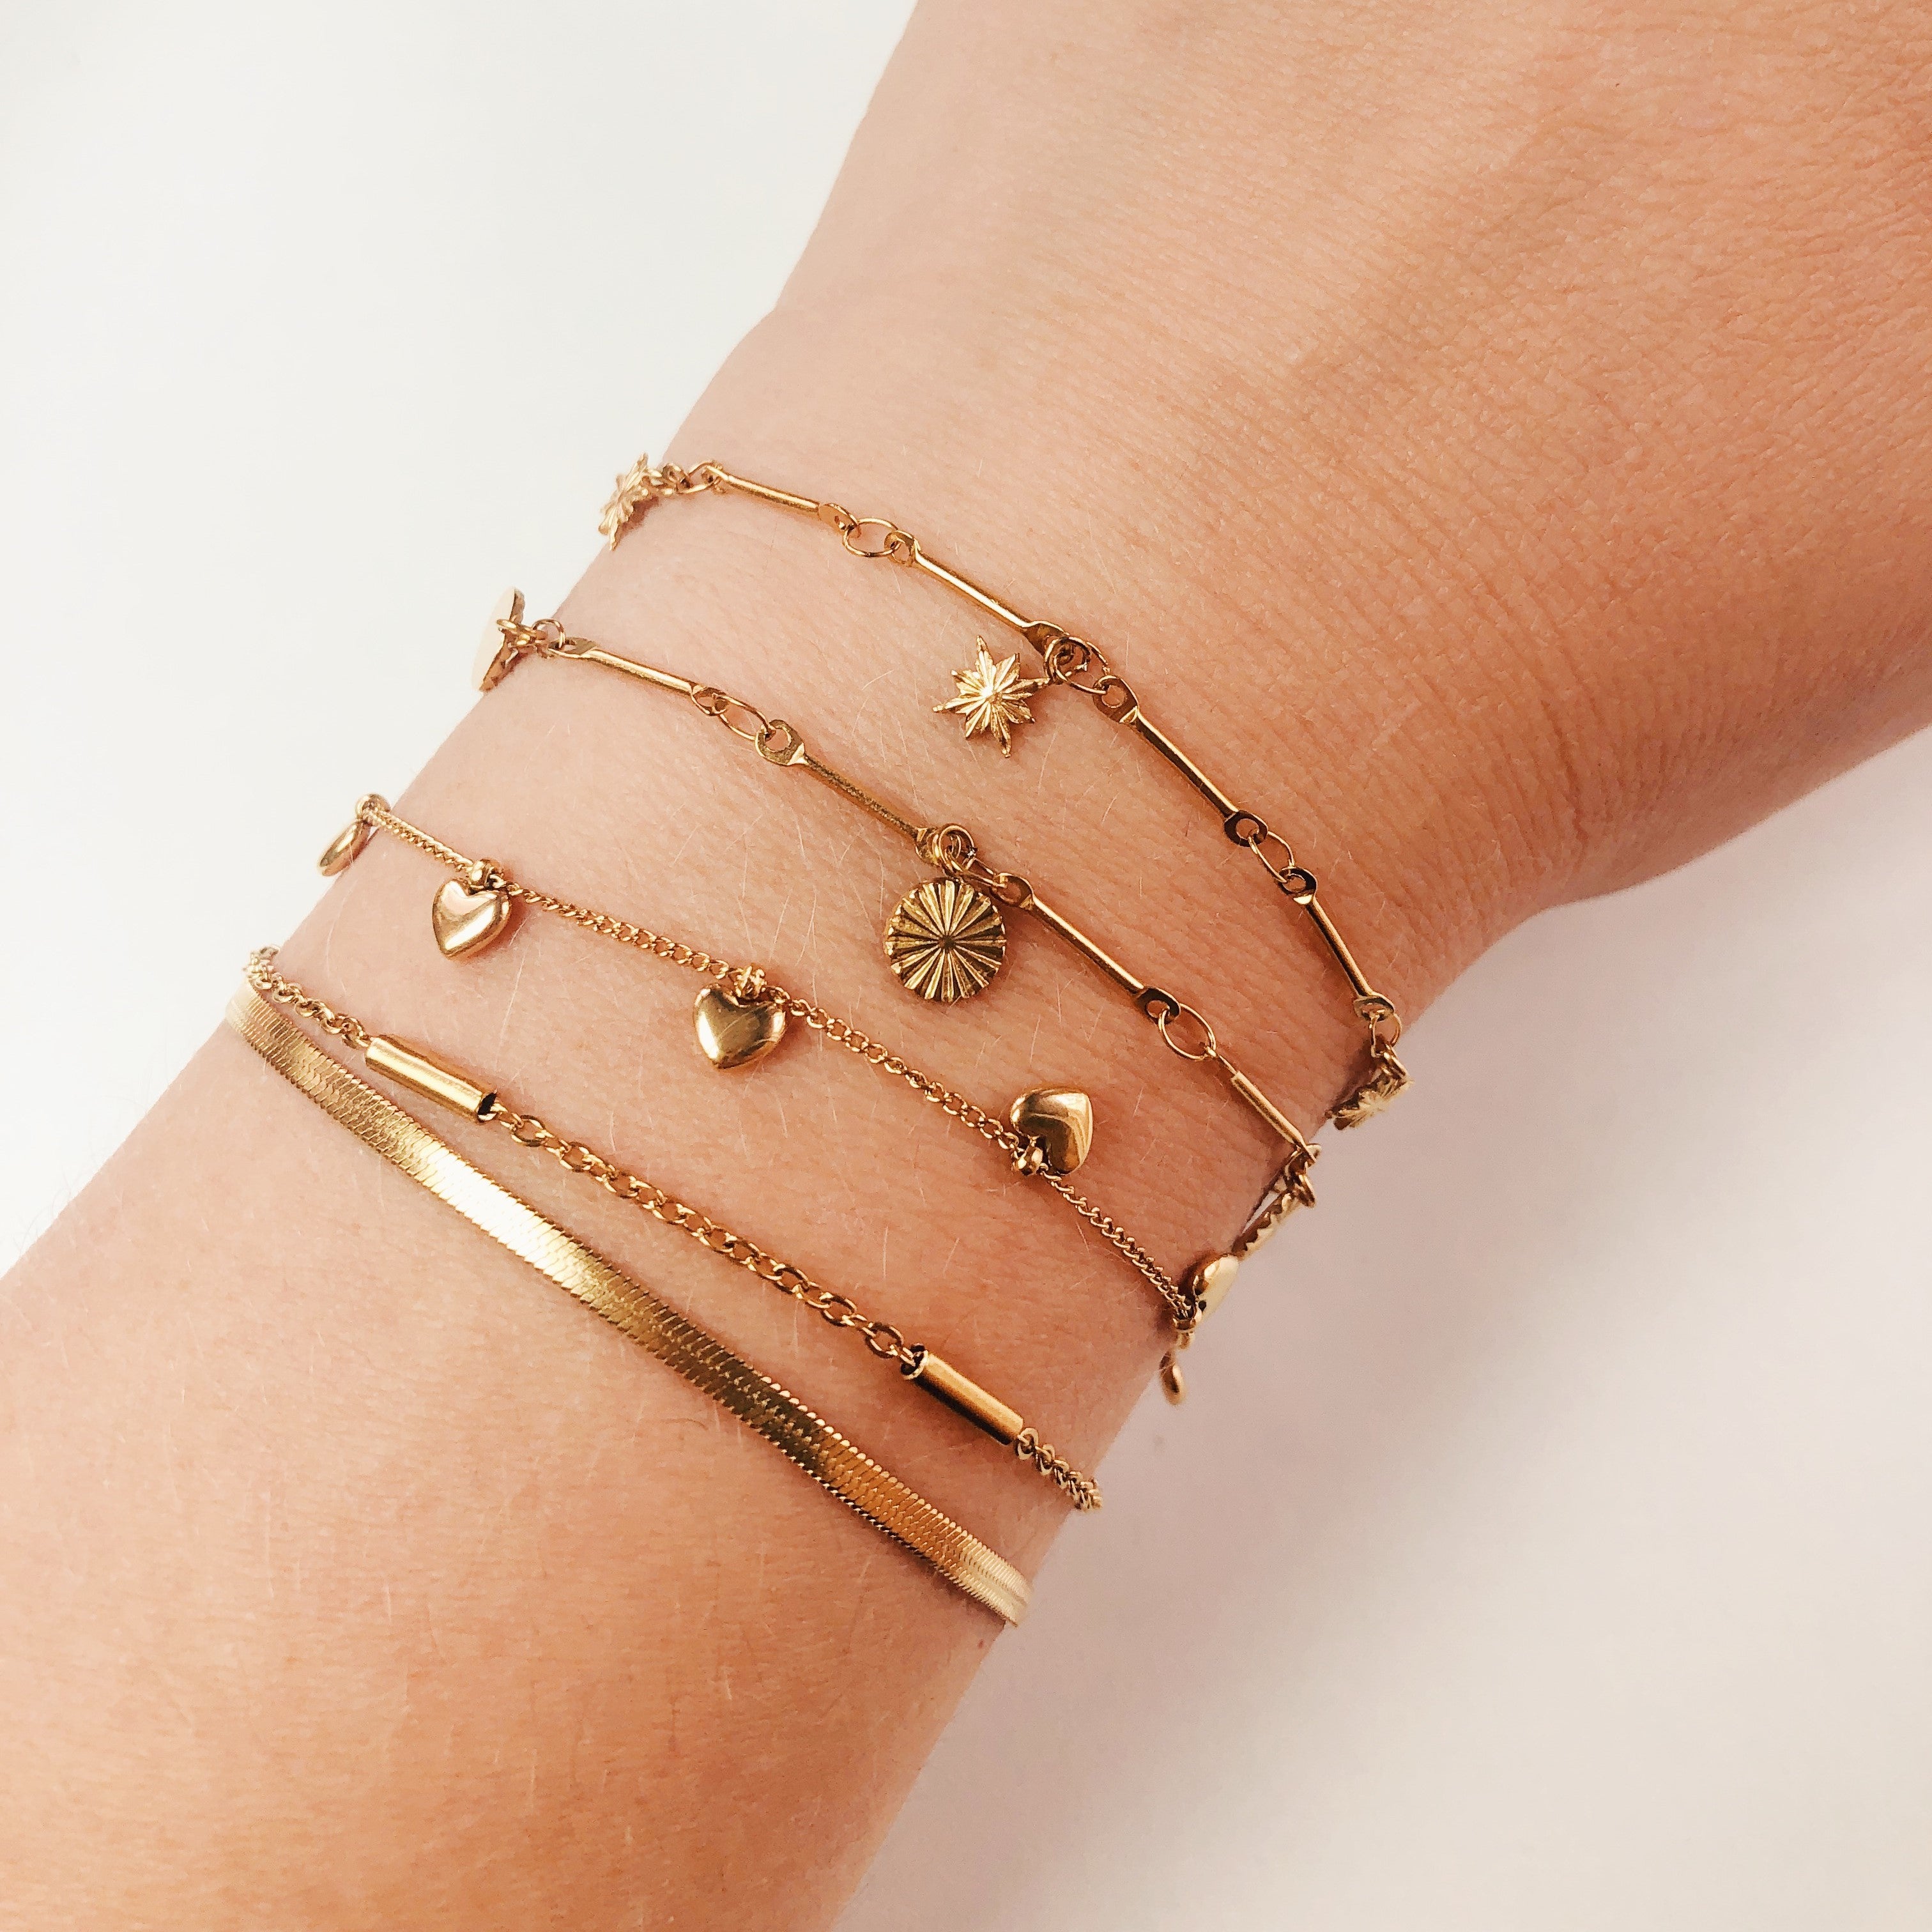 Armband link chain - lillyrose